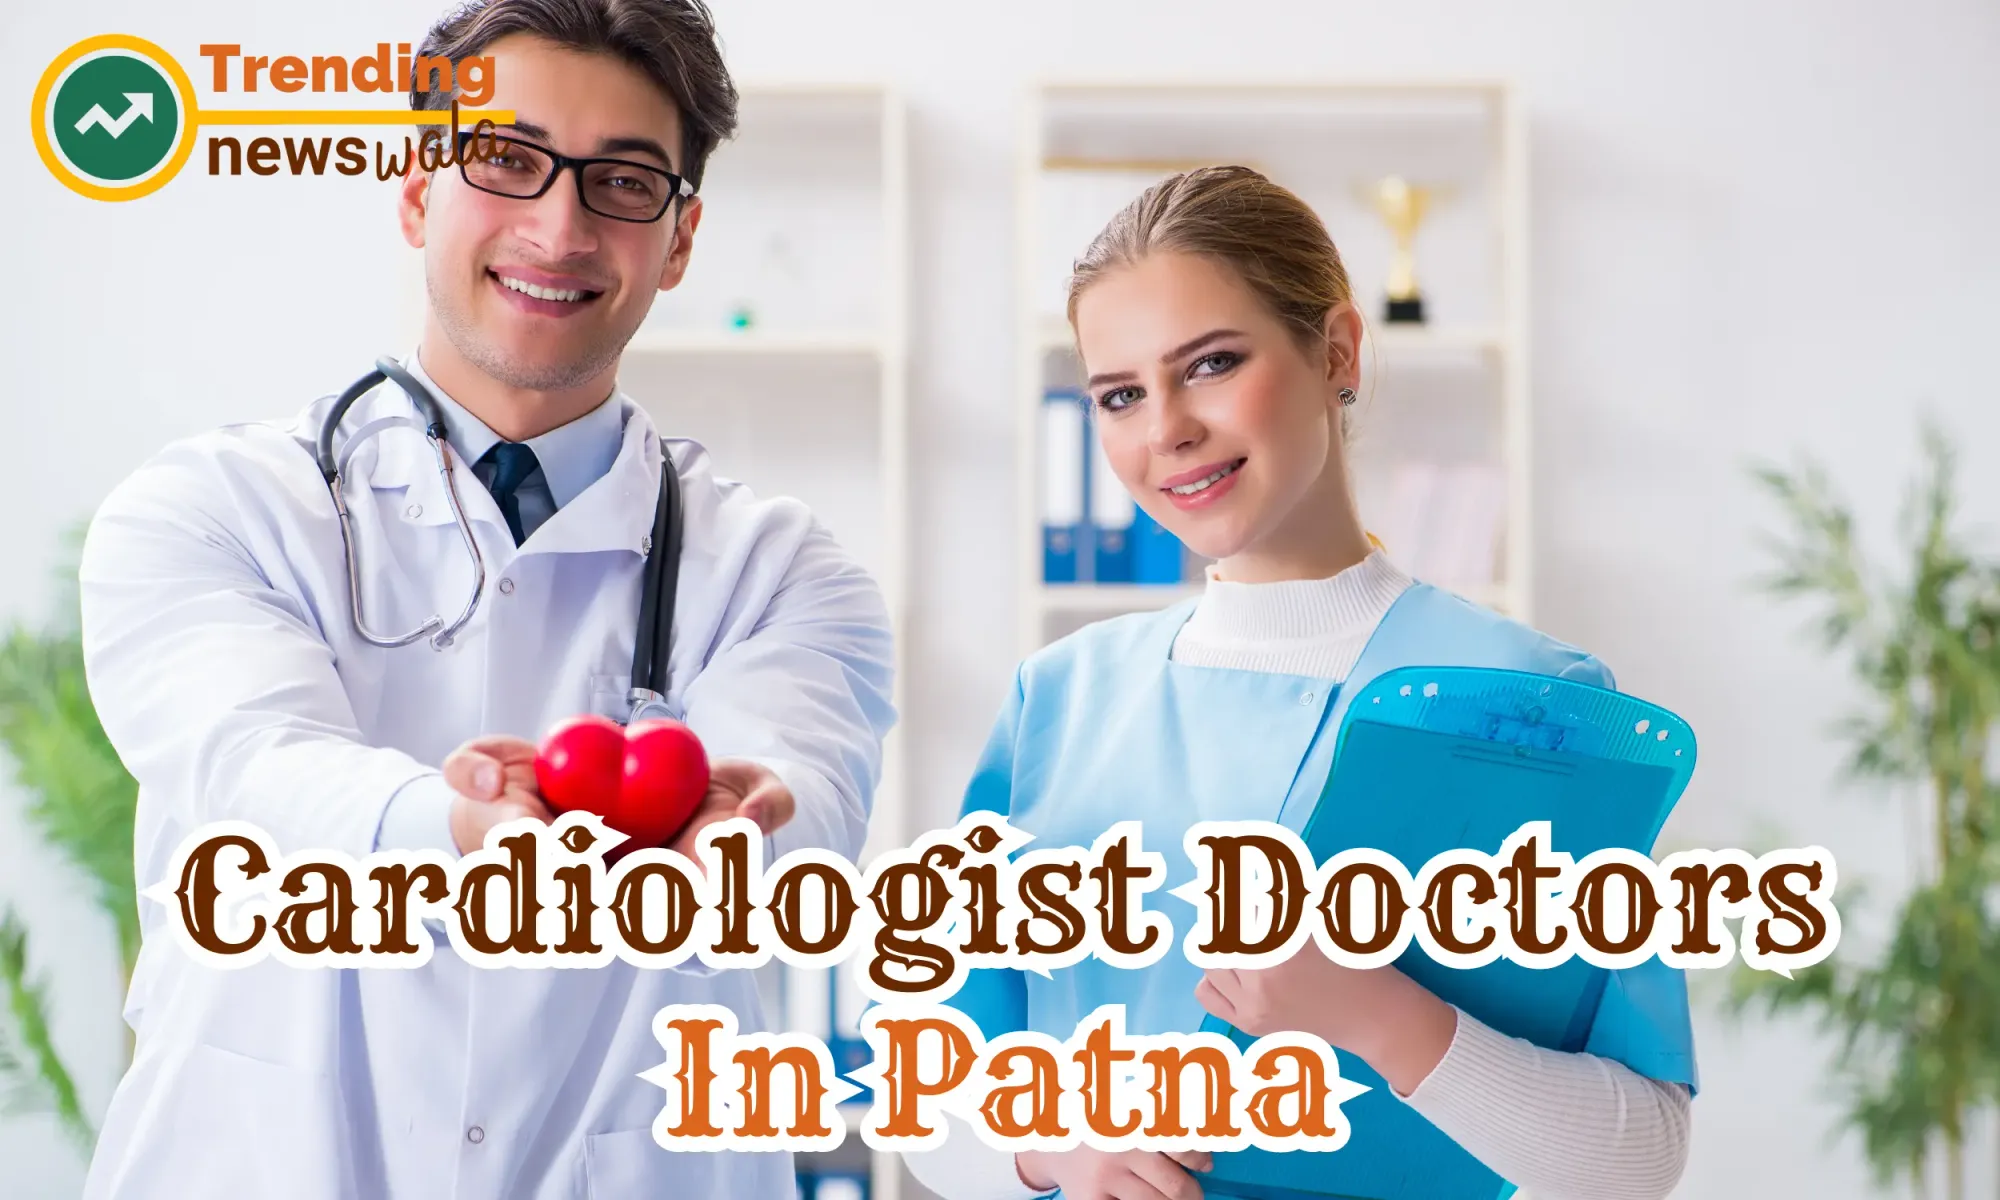 Cardiologist Hospitals in Patna